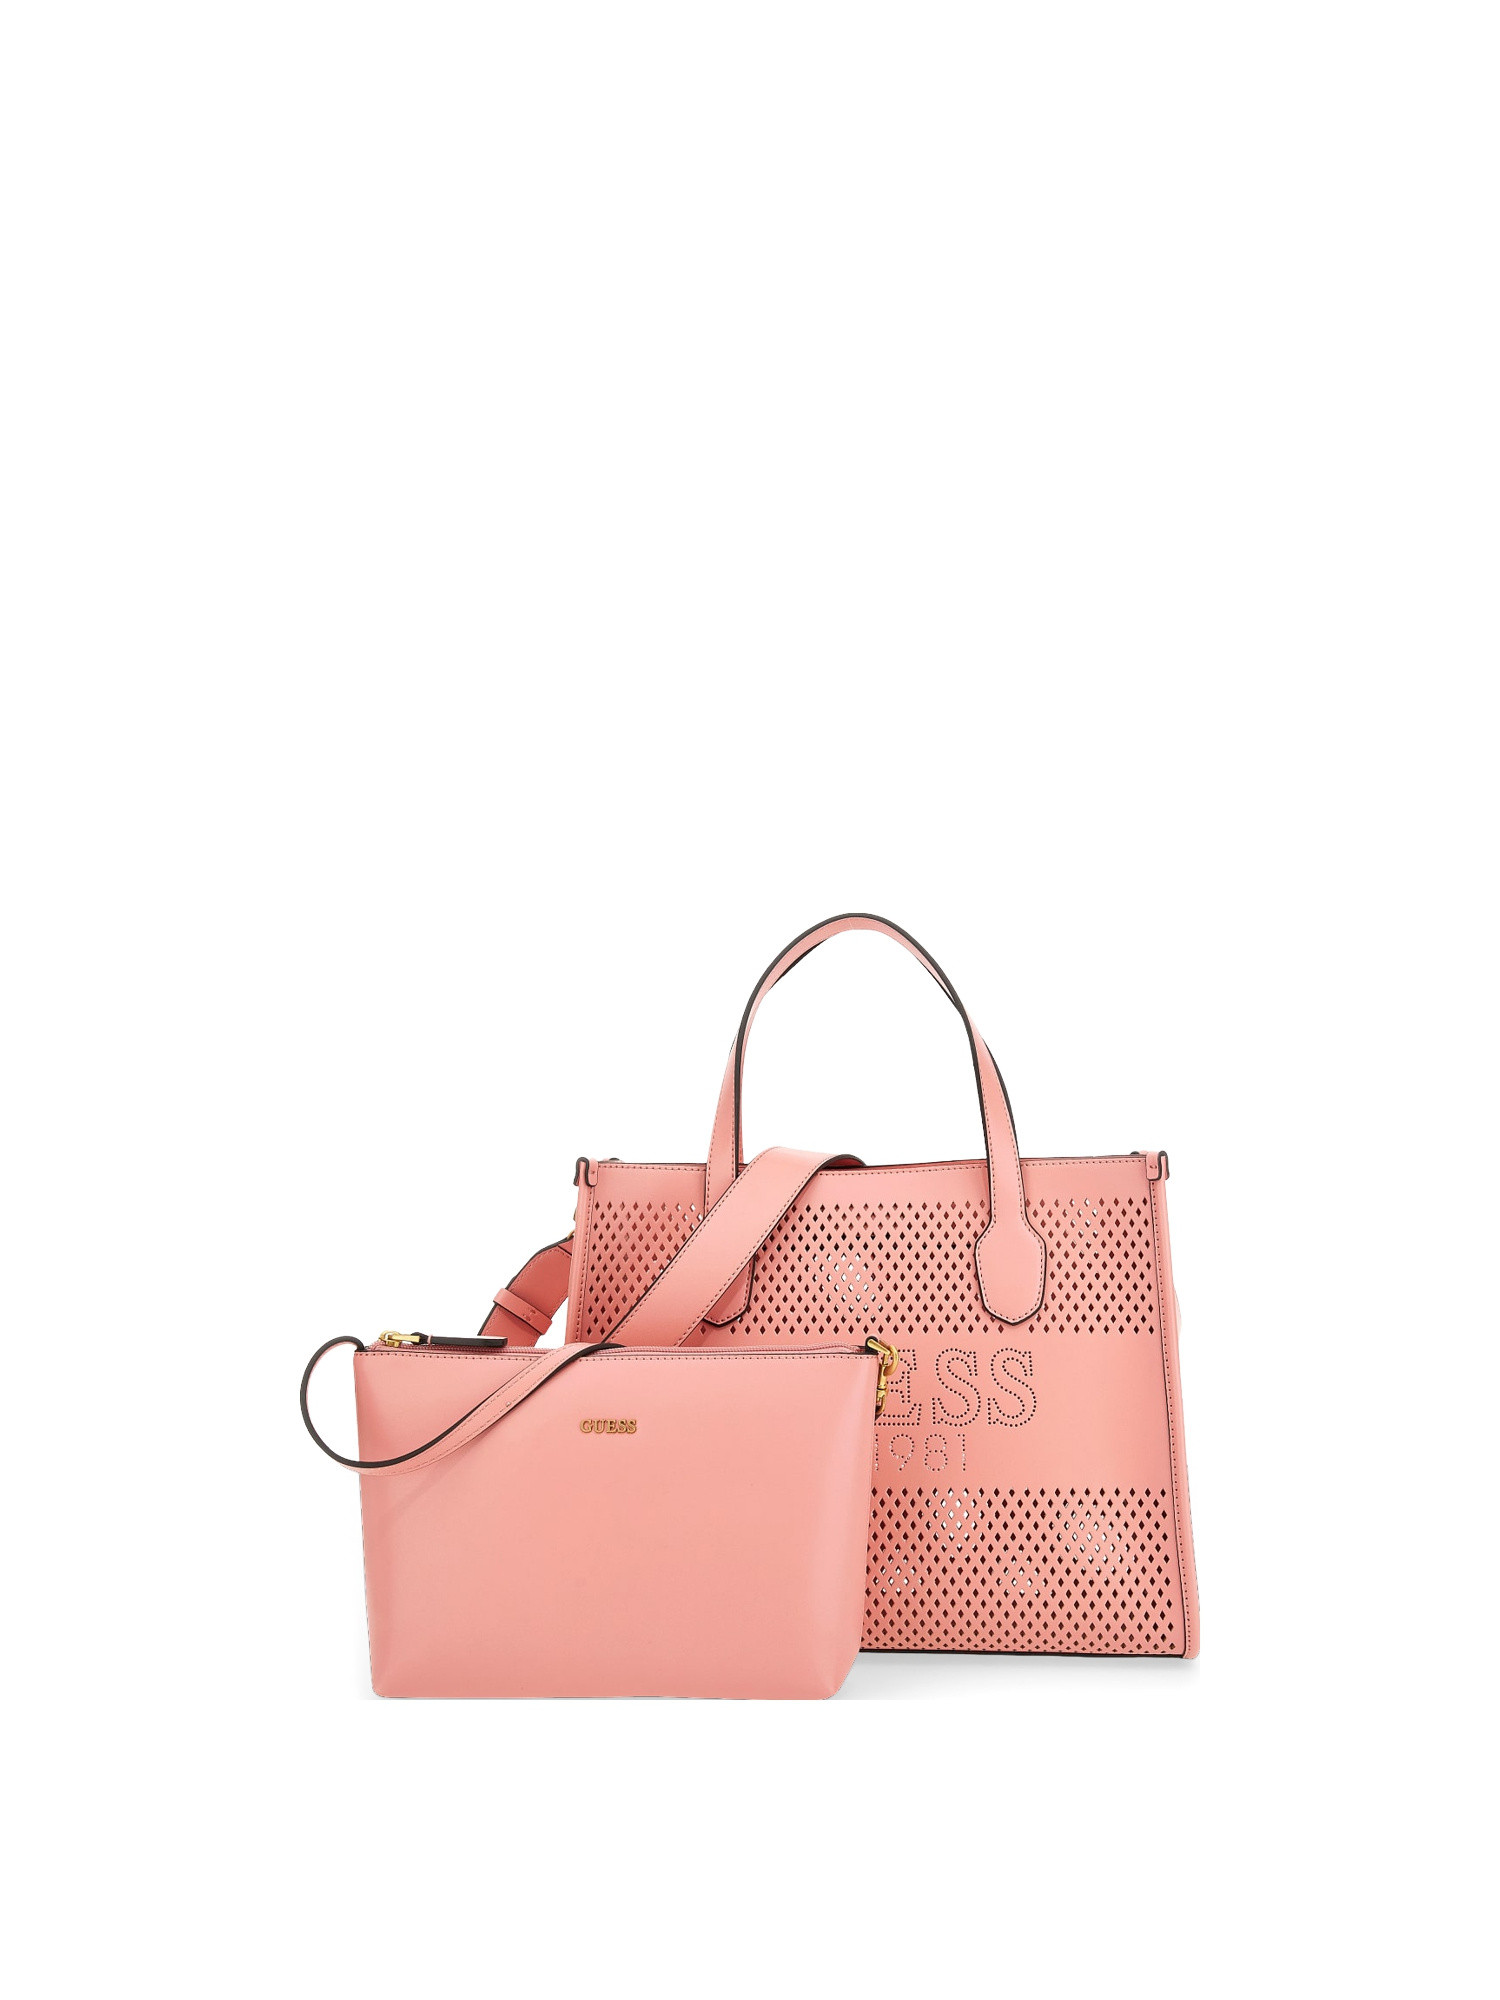 Guess - Katey perforated handbag, Pink, large image number 2